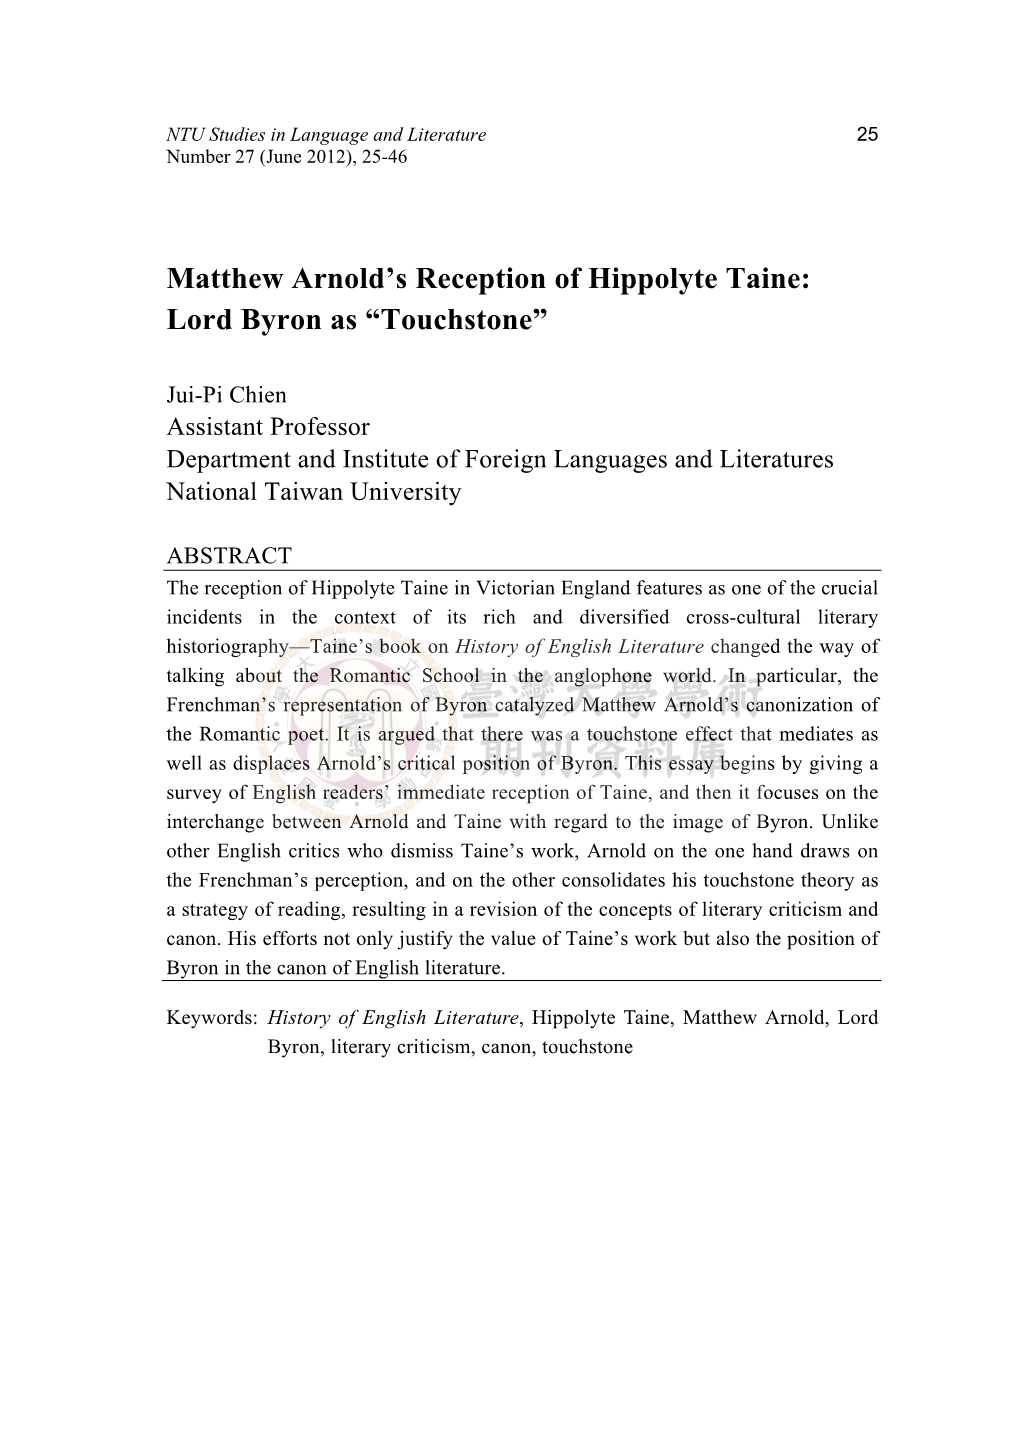 Matthew Arnold's Reception of Hippolyte Taine